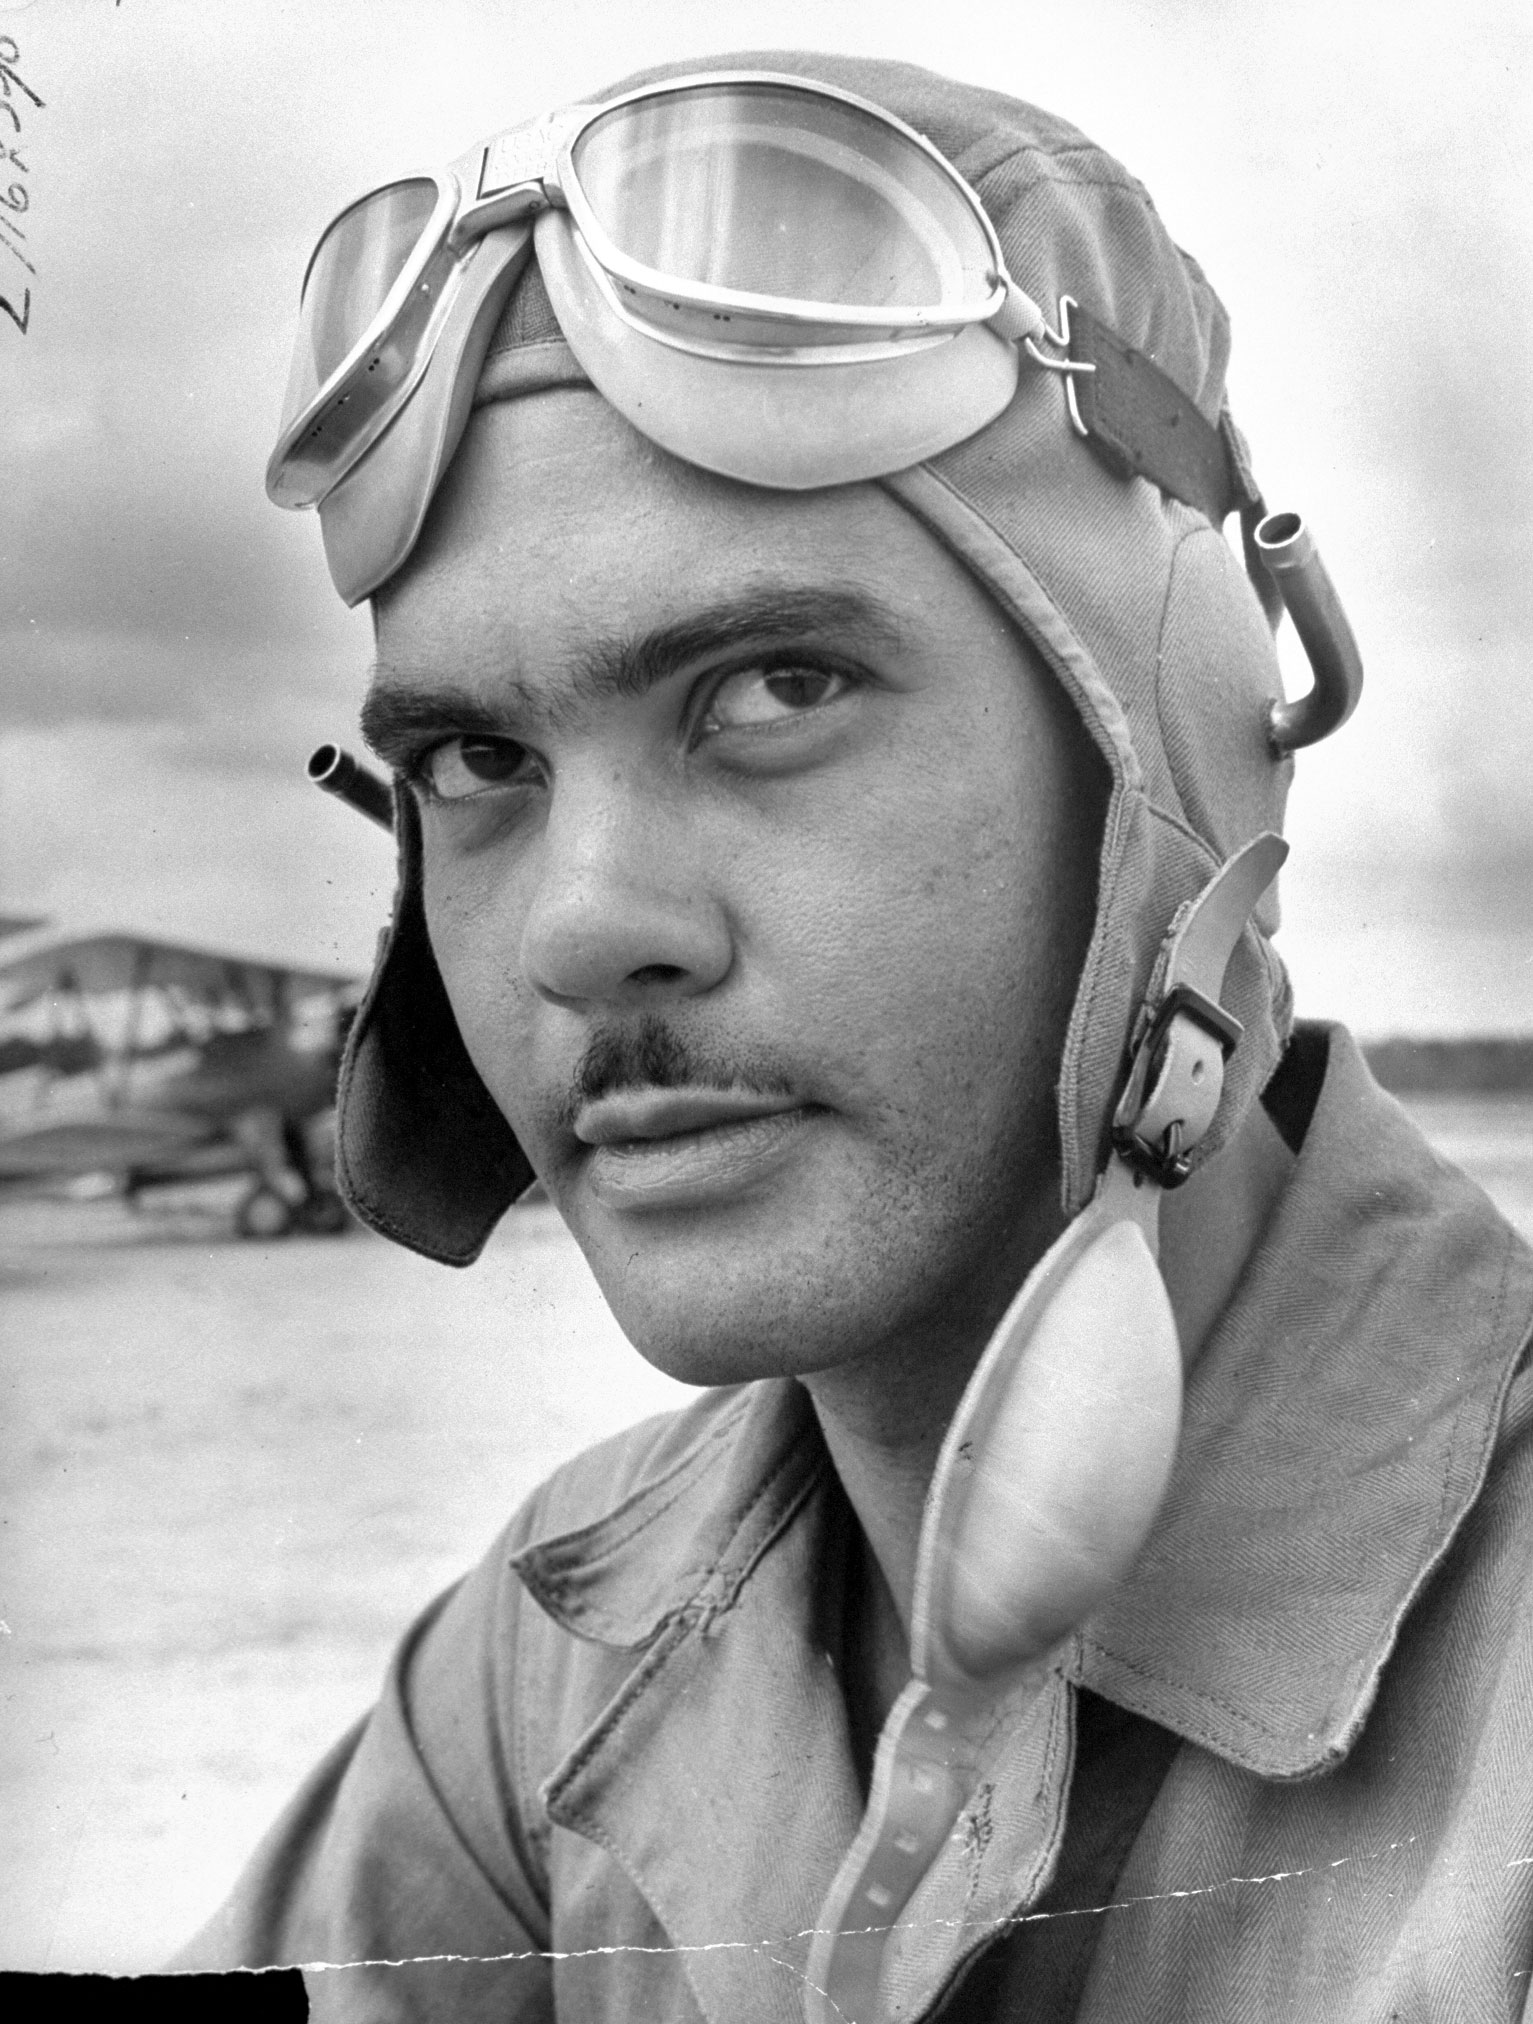 Captain Benjamin O. Davis Jr., ldr. of US Army Air Corps 99th Pursuit Squadron, at flight-training school, 1942.